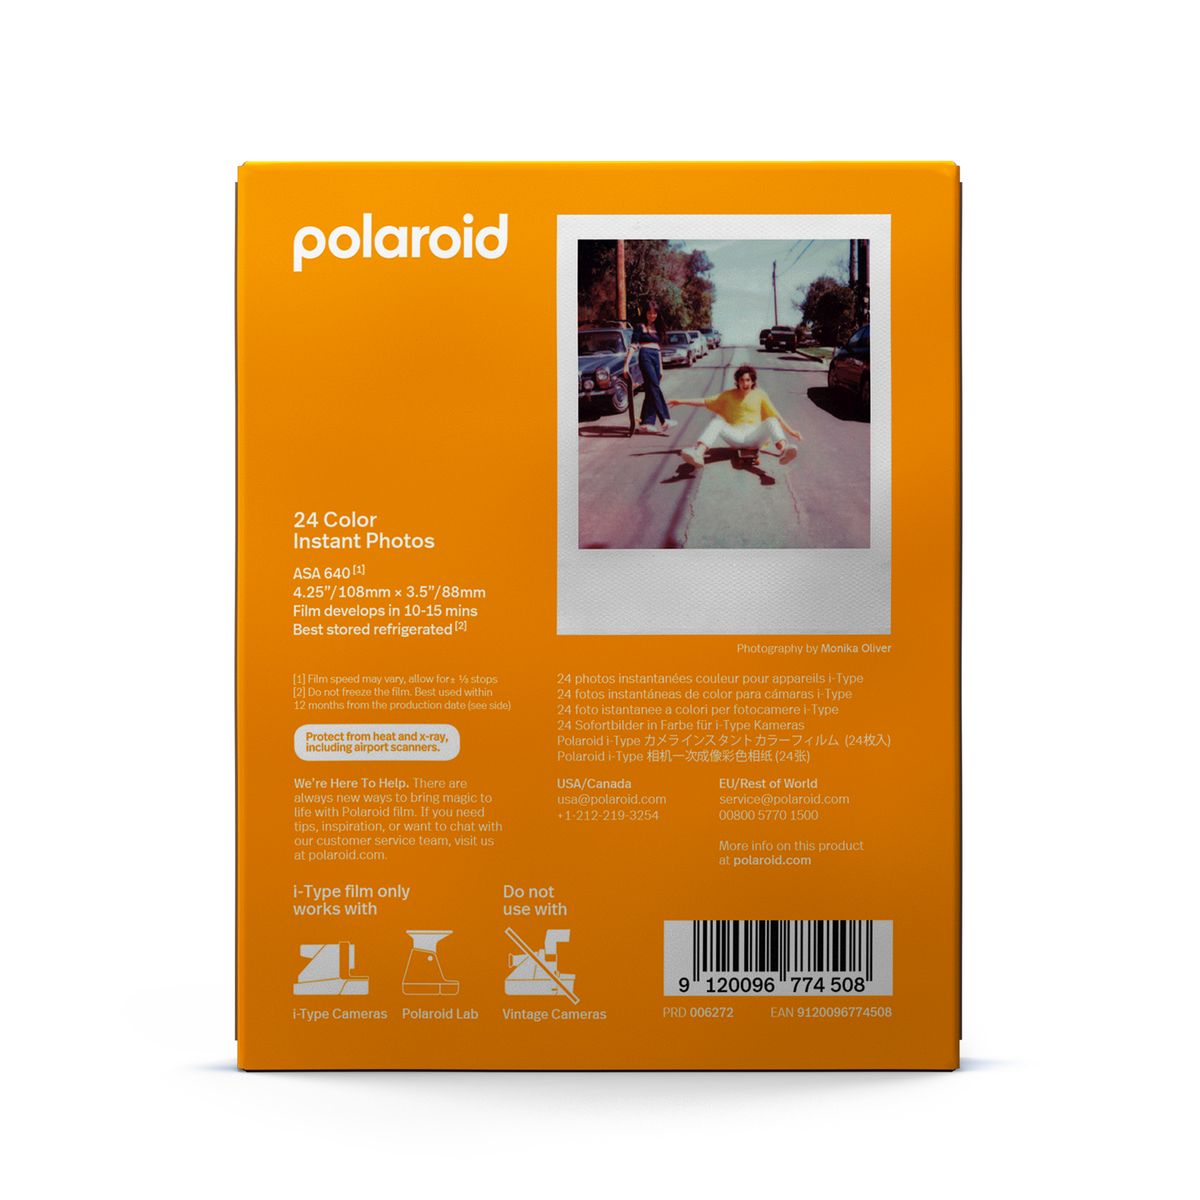 Polaroid i-Type Color Film - Triple Pack 3x8